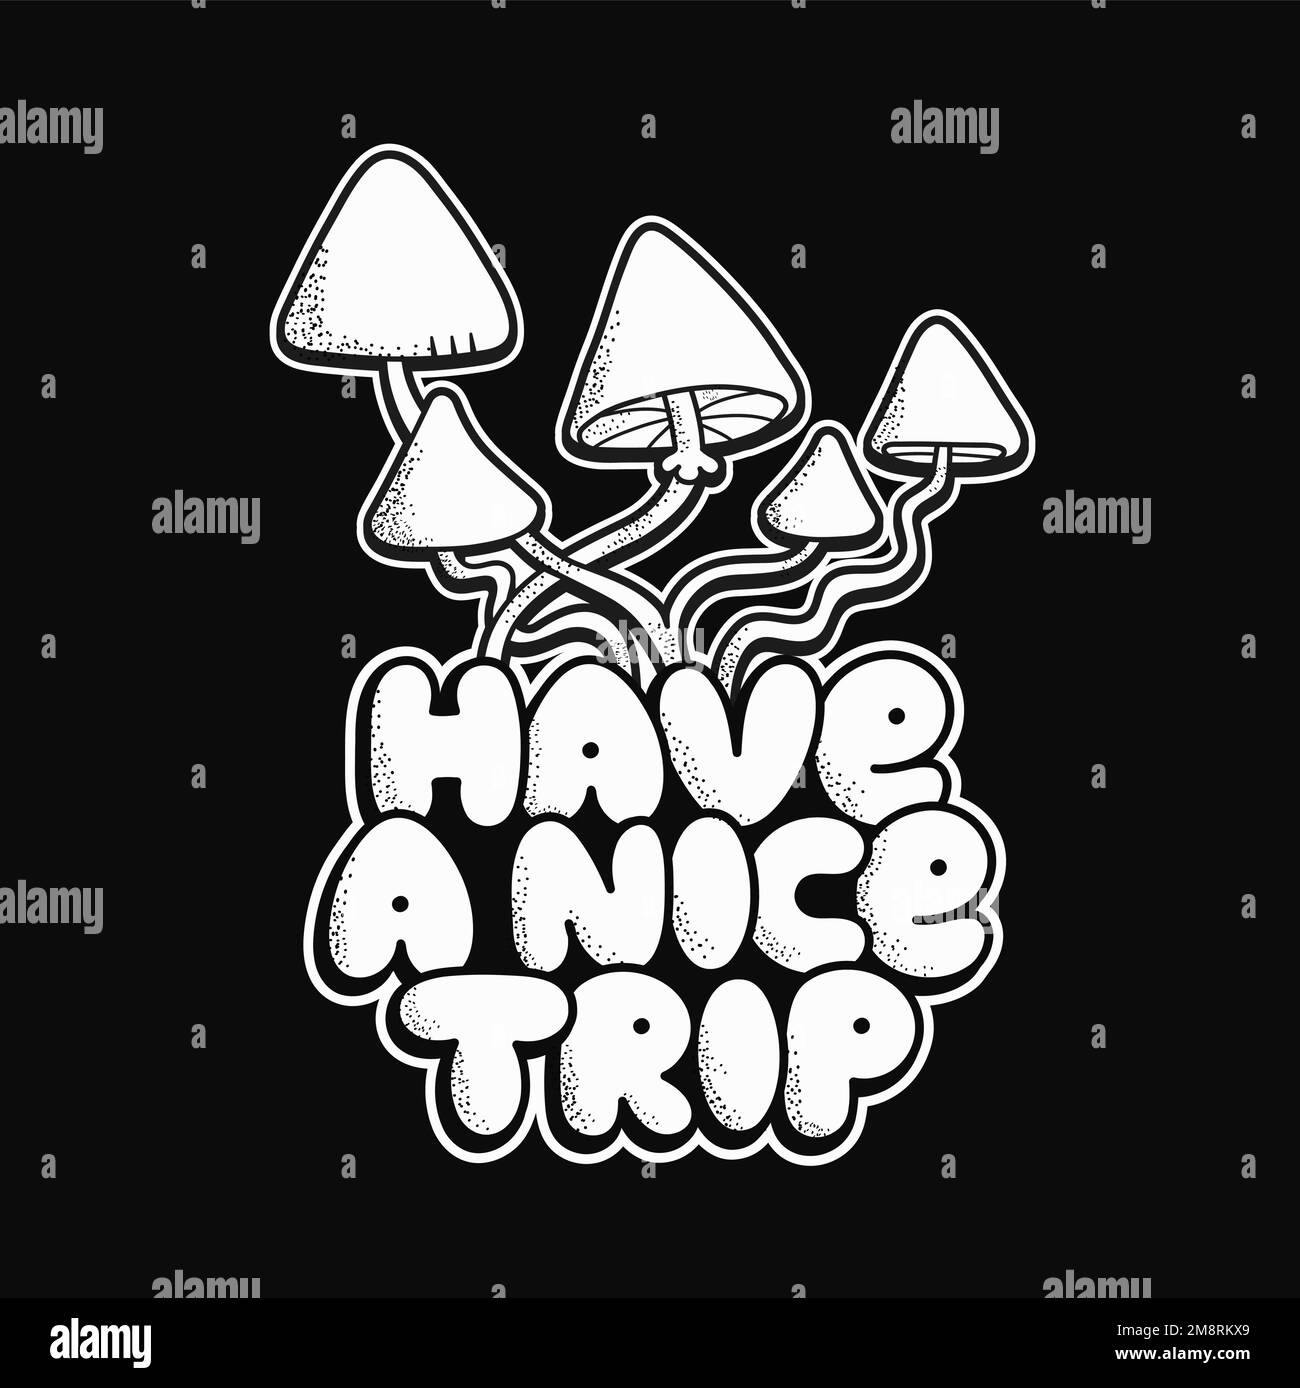 Magic psilocybin mushrooms print for t-shirt.Have a nice trip quote slogan.Vector cartoon graphic illustration logo design Stock Vector